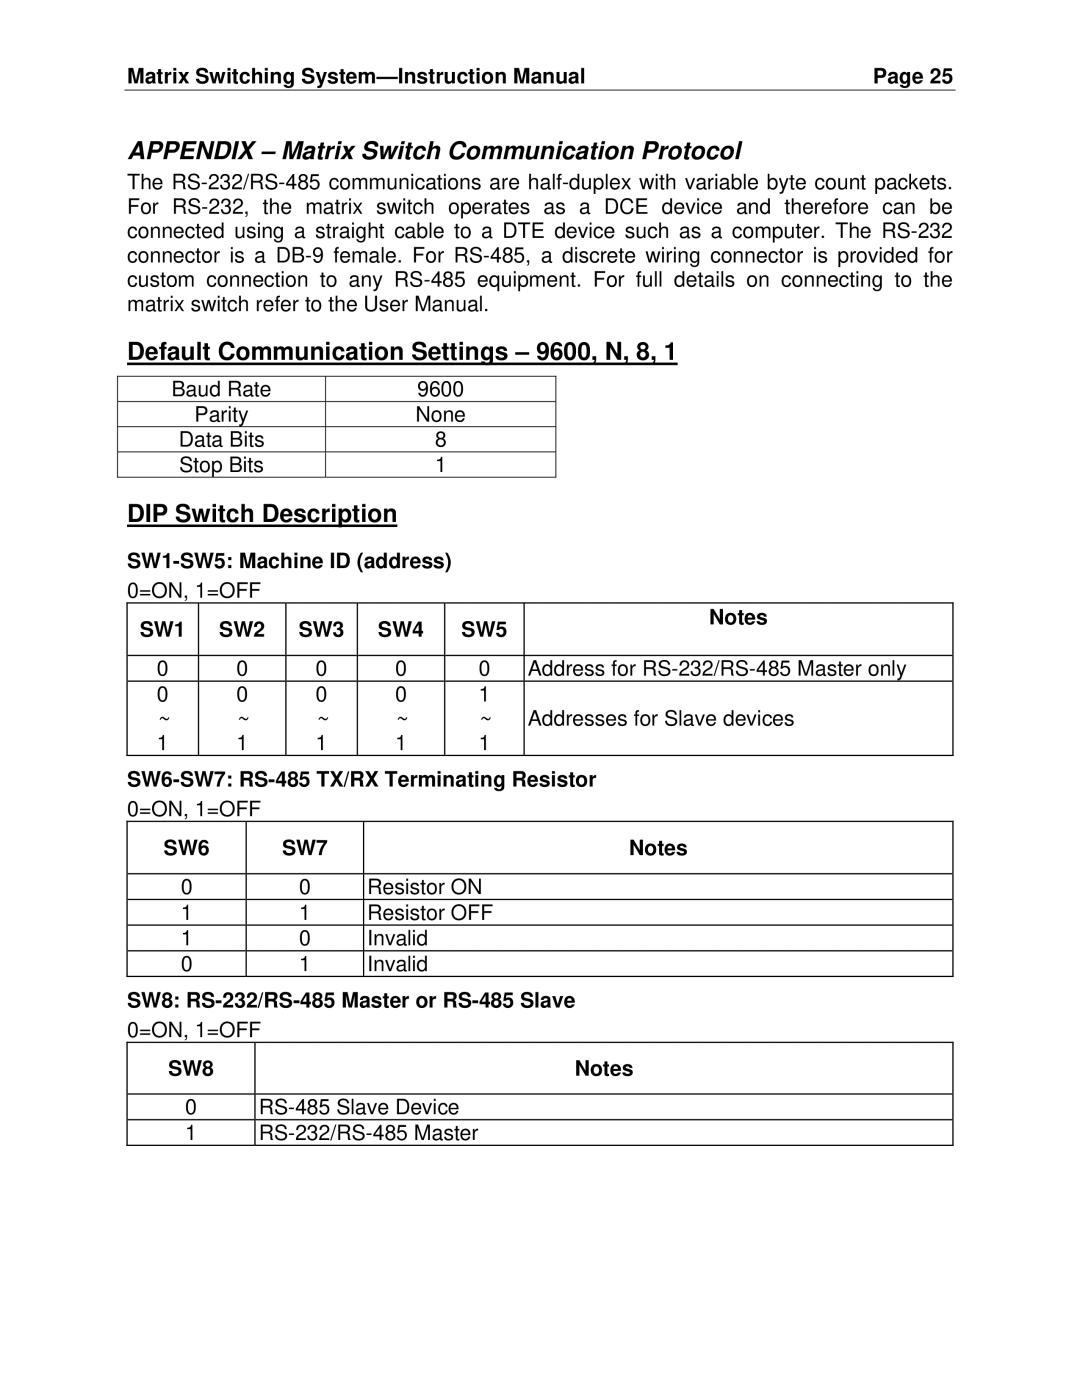 Cable Electronics SW404HD manual Appendix Matrix Switch Communication Protocol, Default Communication Settings 9600, N, 8 